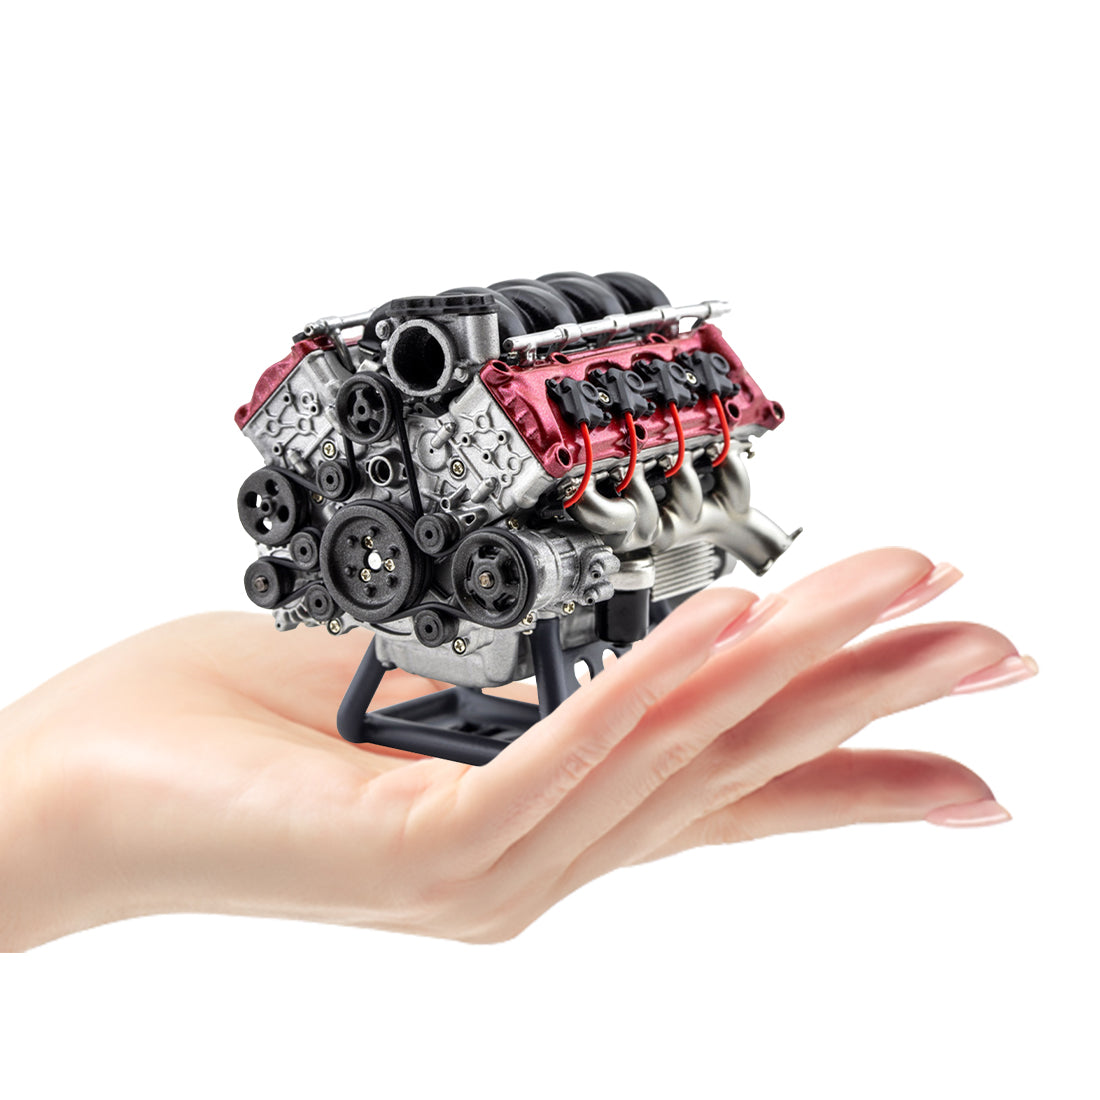 V8 Model Engine build kit